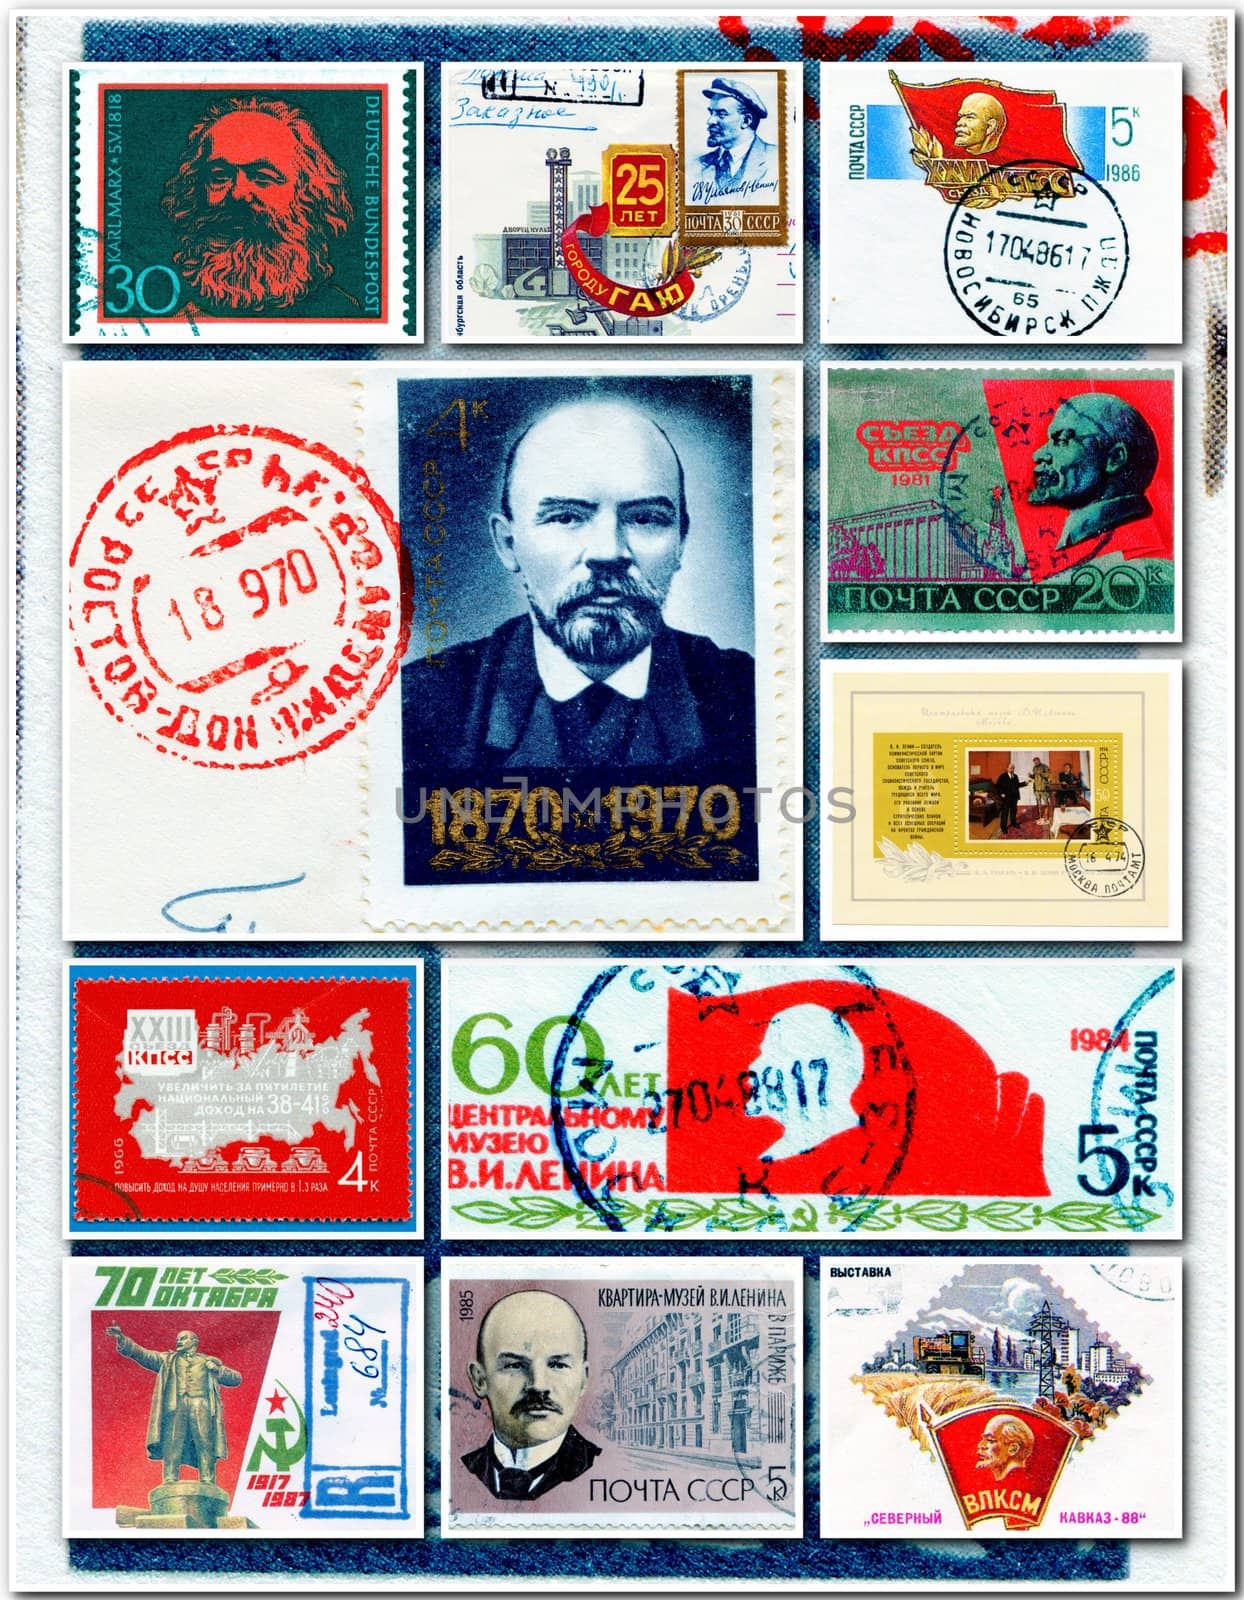 communists collage